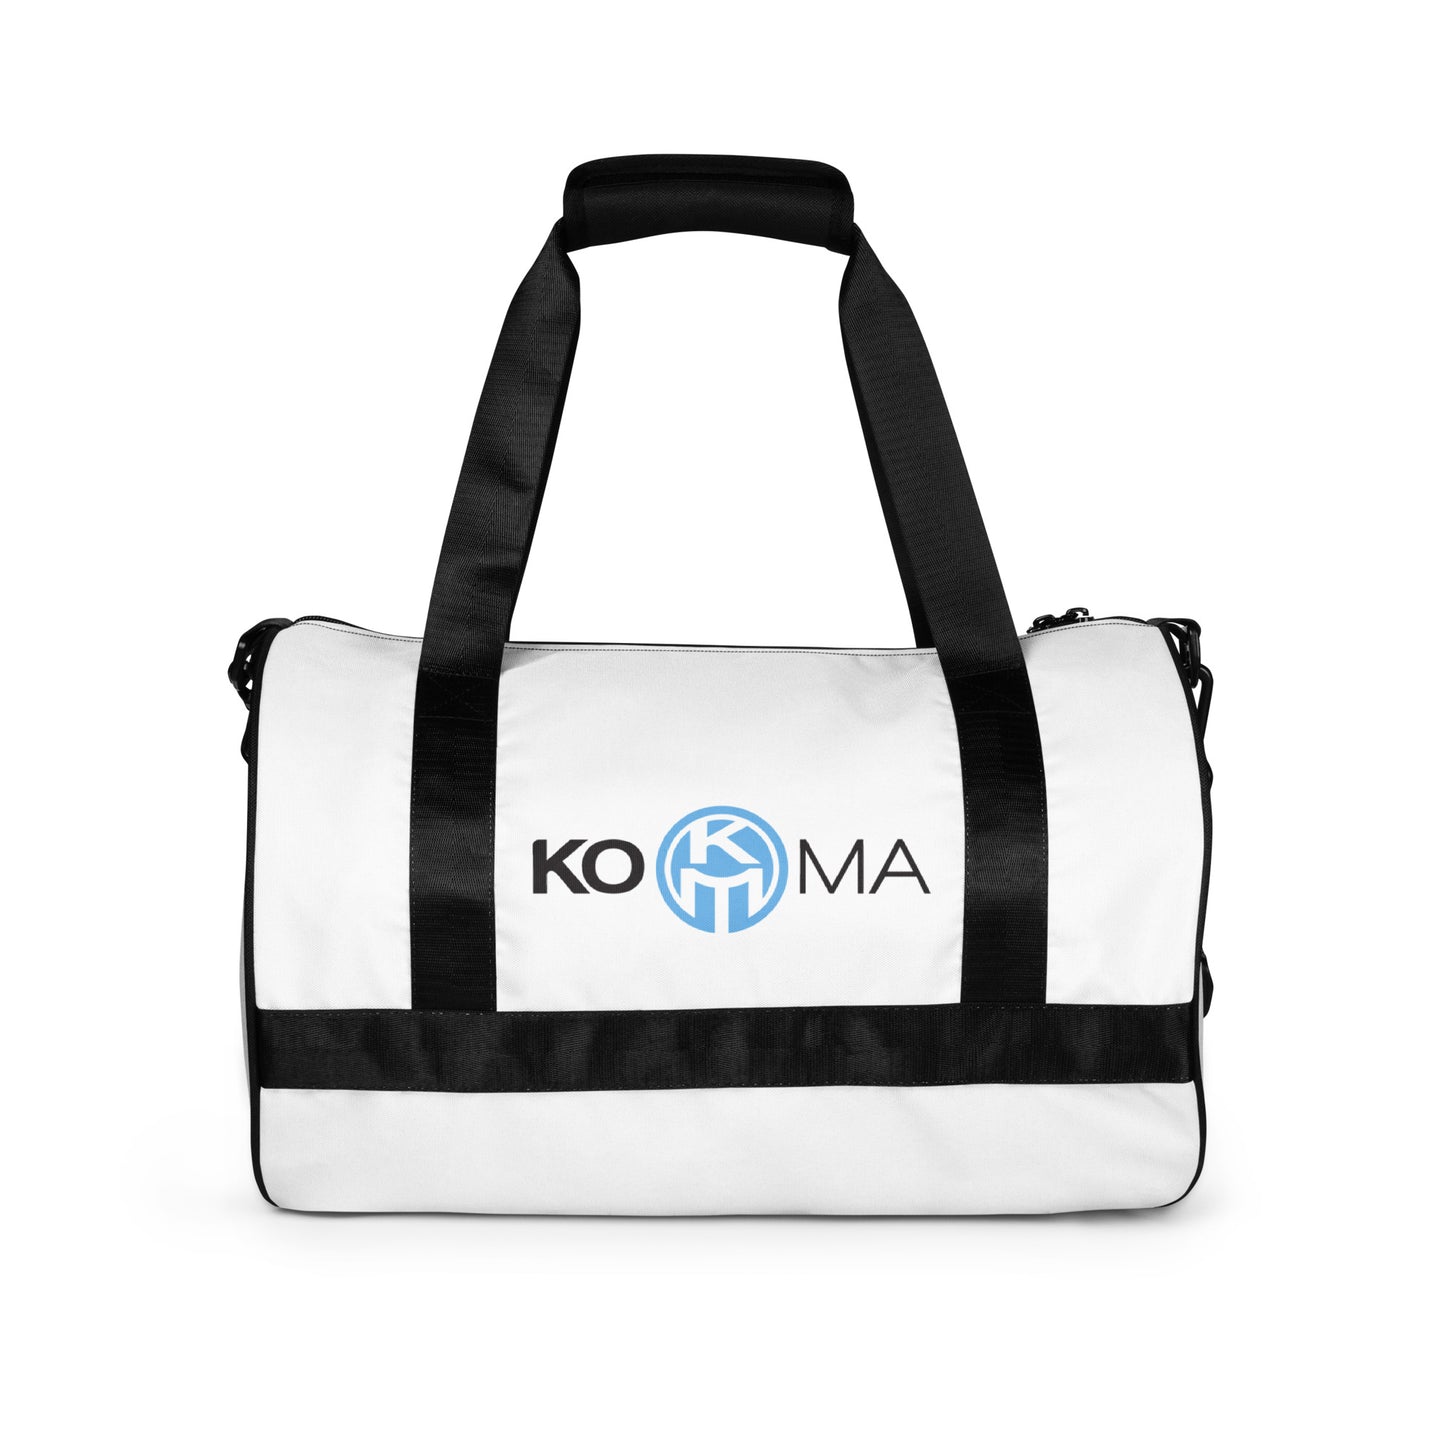 KOMA Duffle Bag